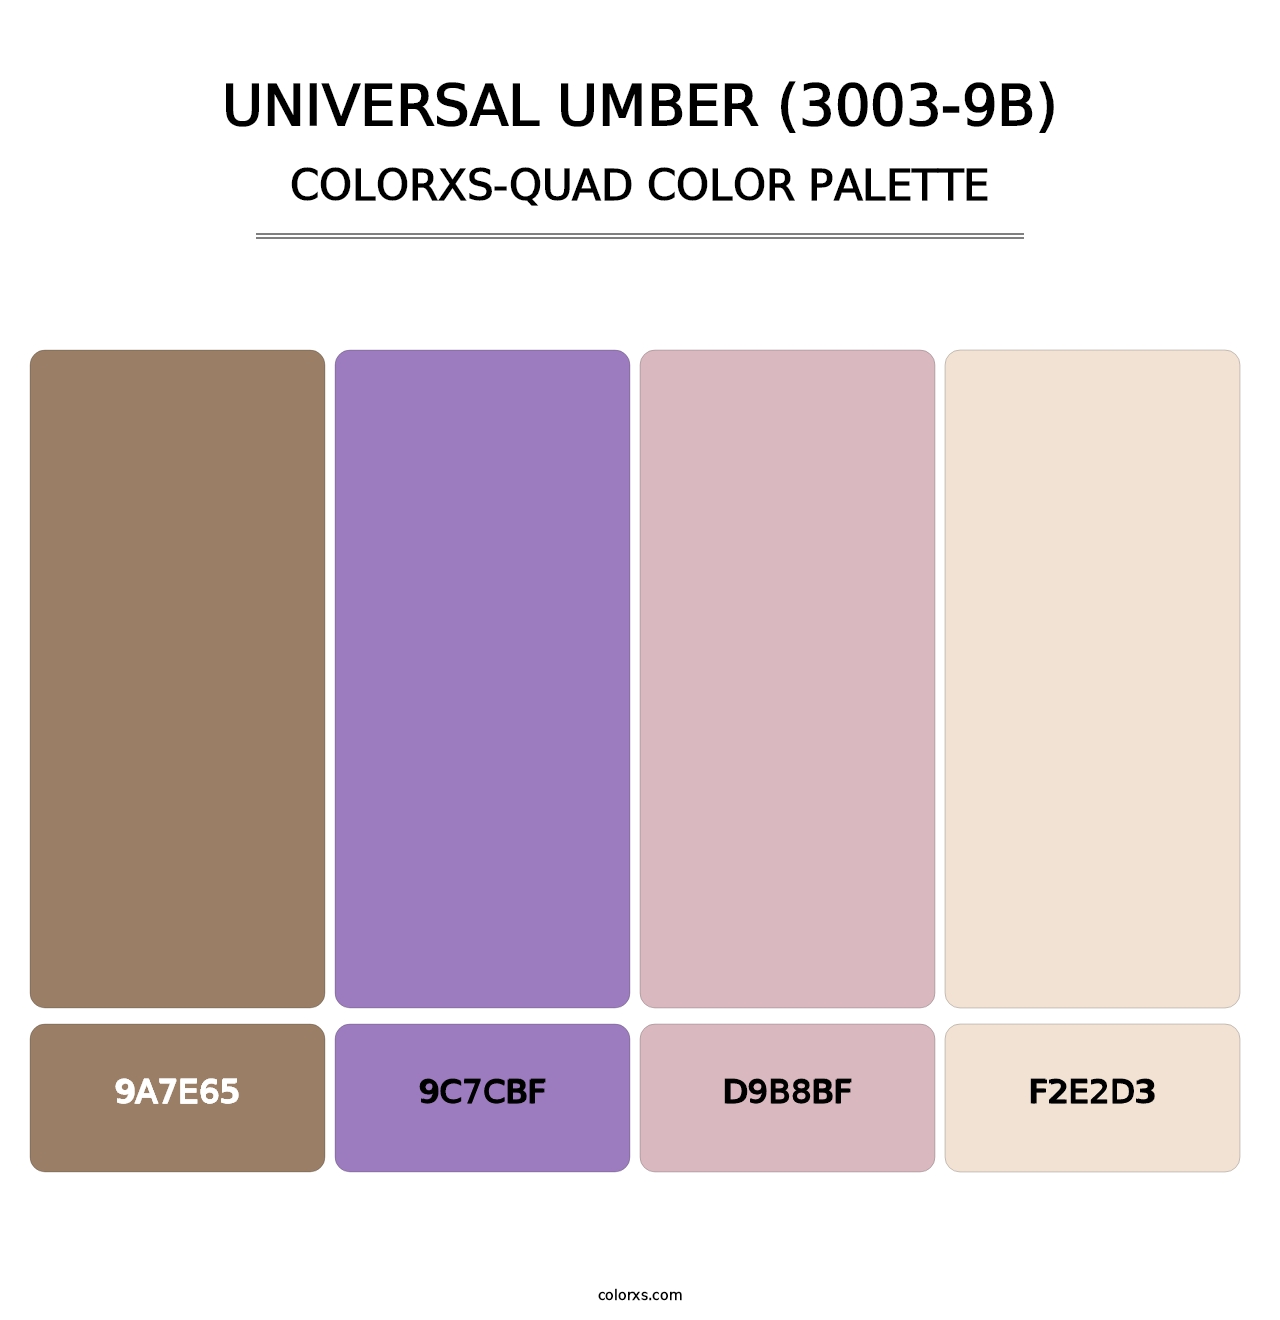 Universal Umber (3003-9B) - Colorxs Quad Palette